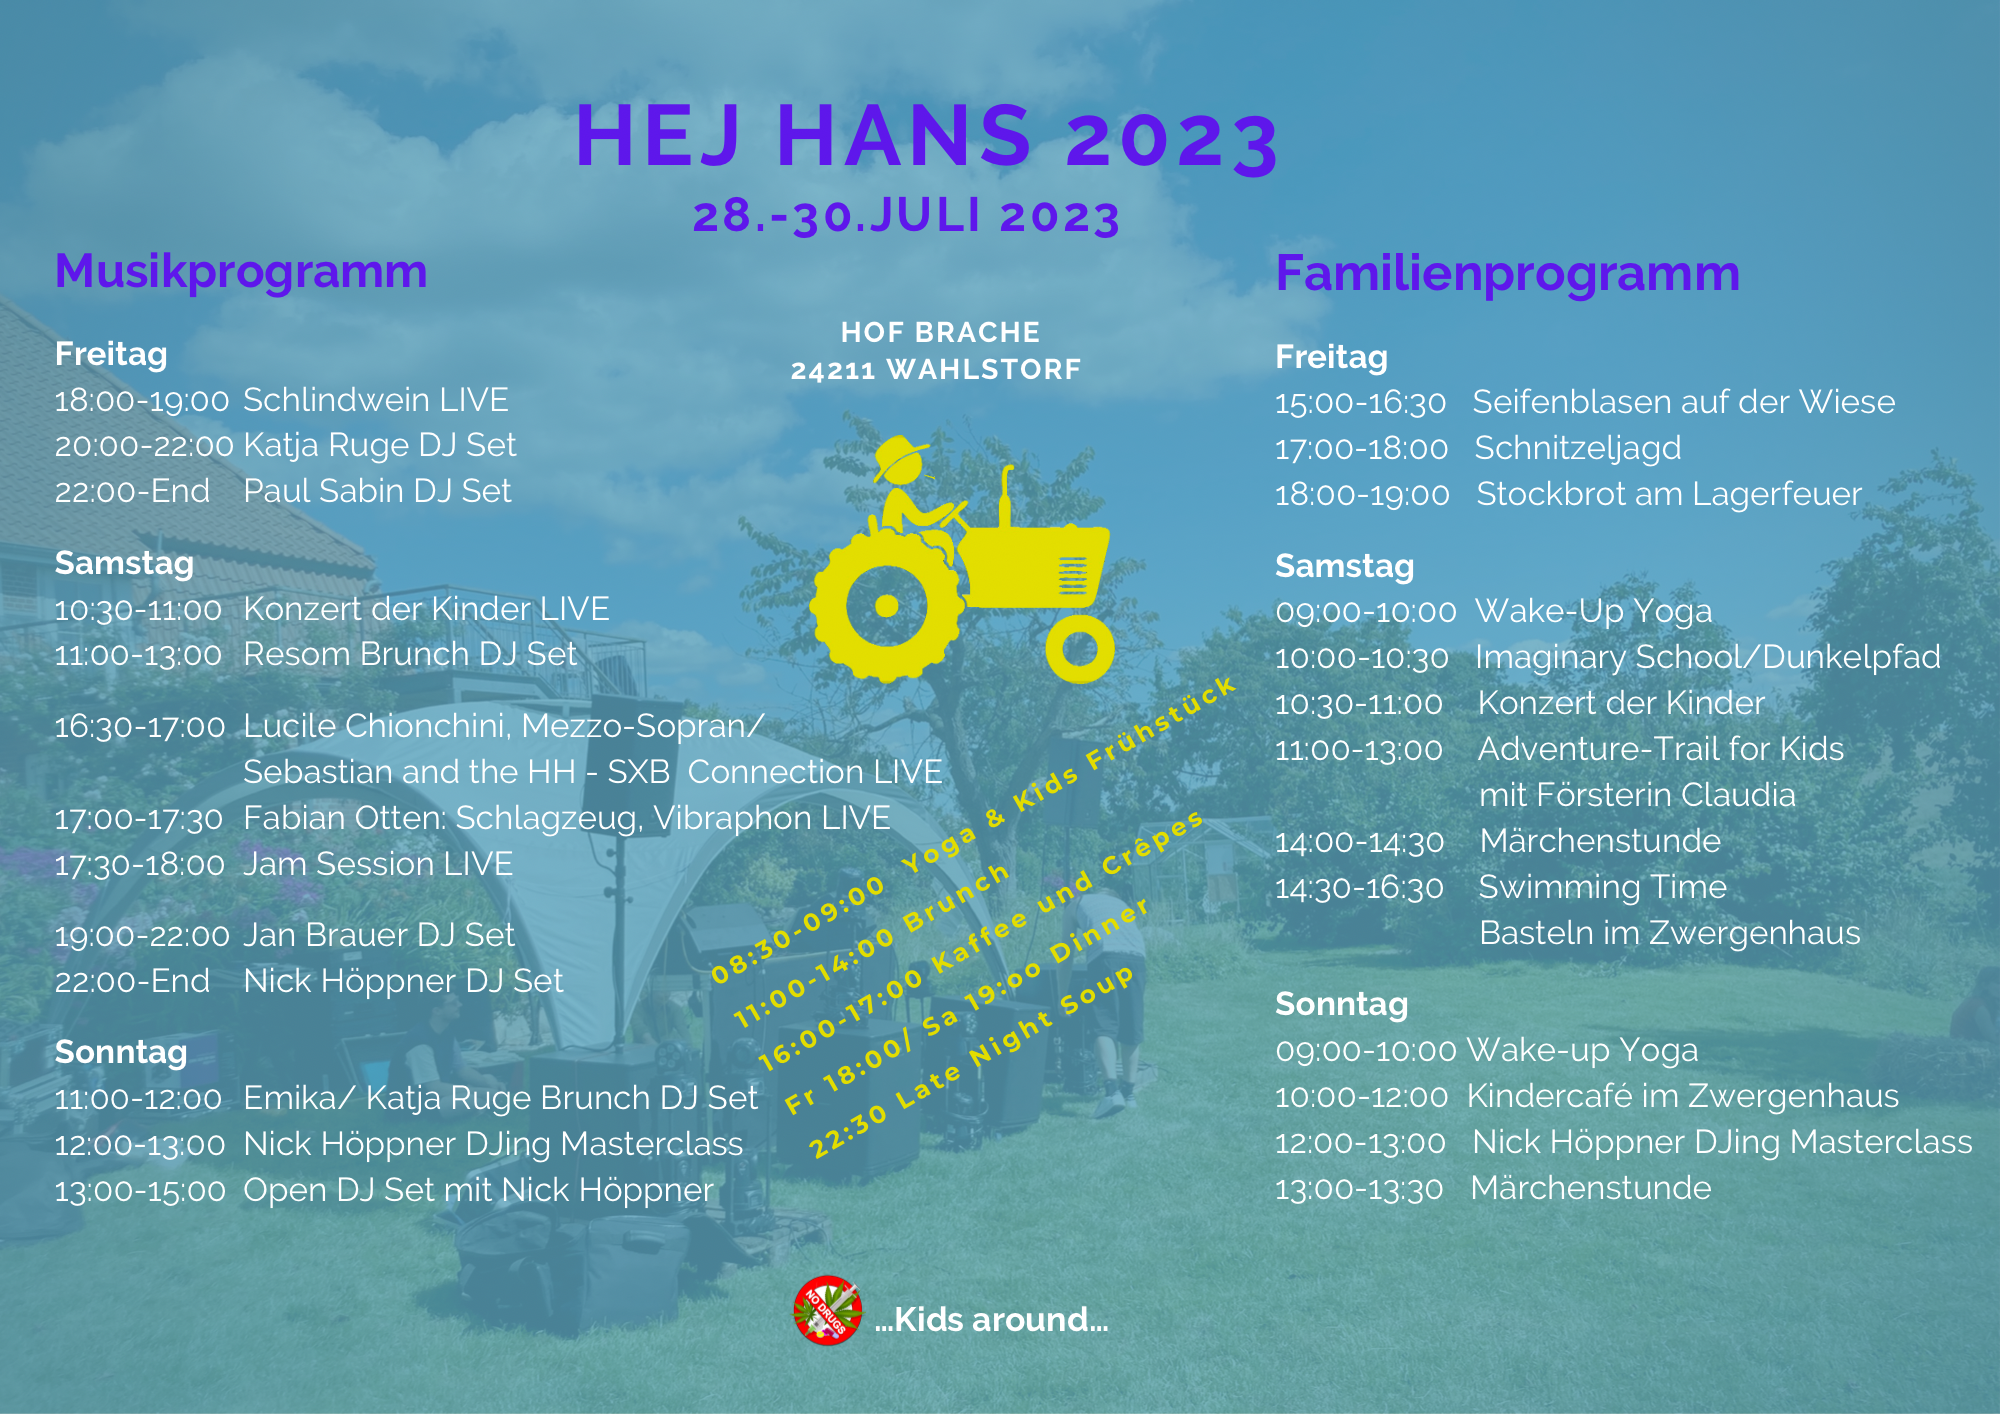 Hej Hans Festival 2023 - フライヤー裏